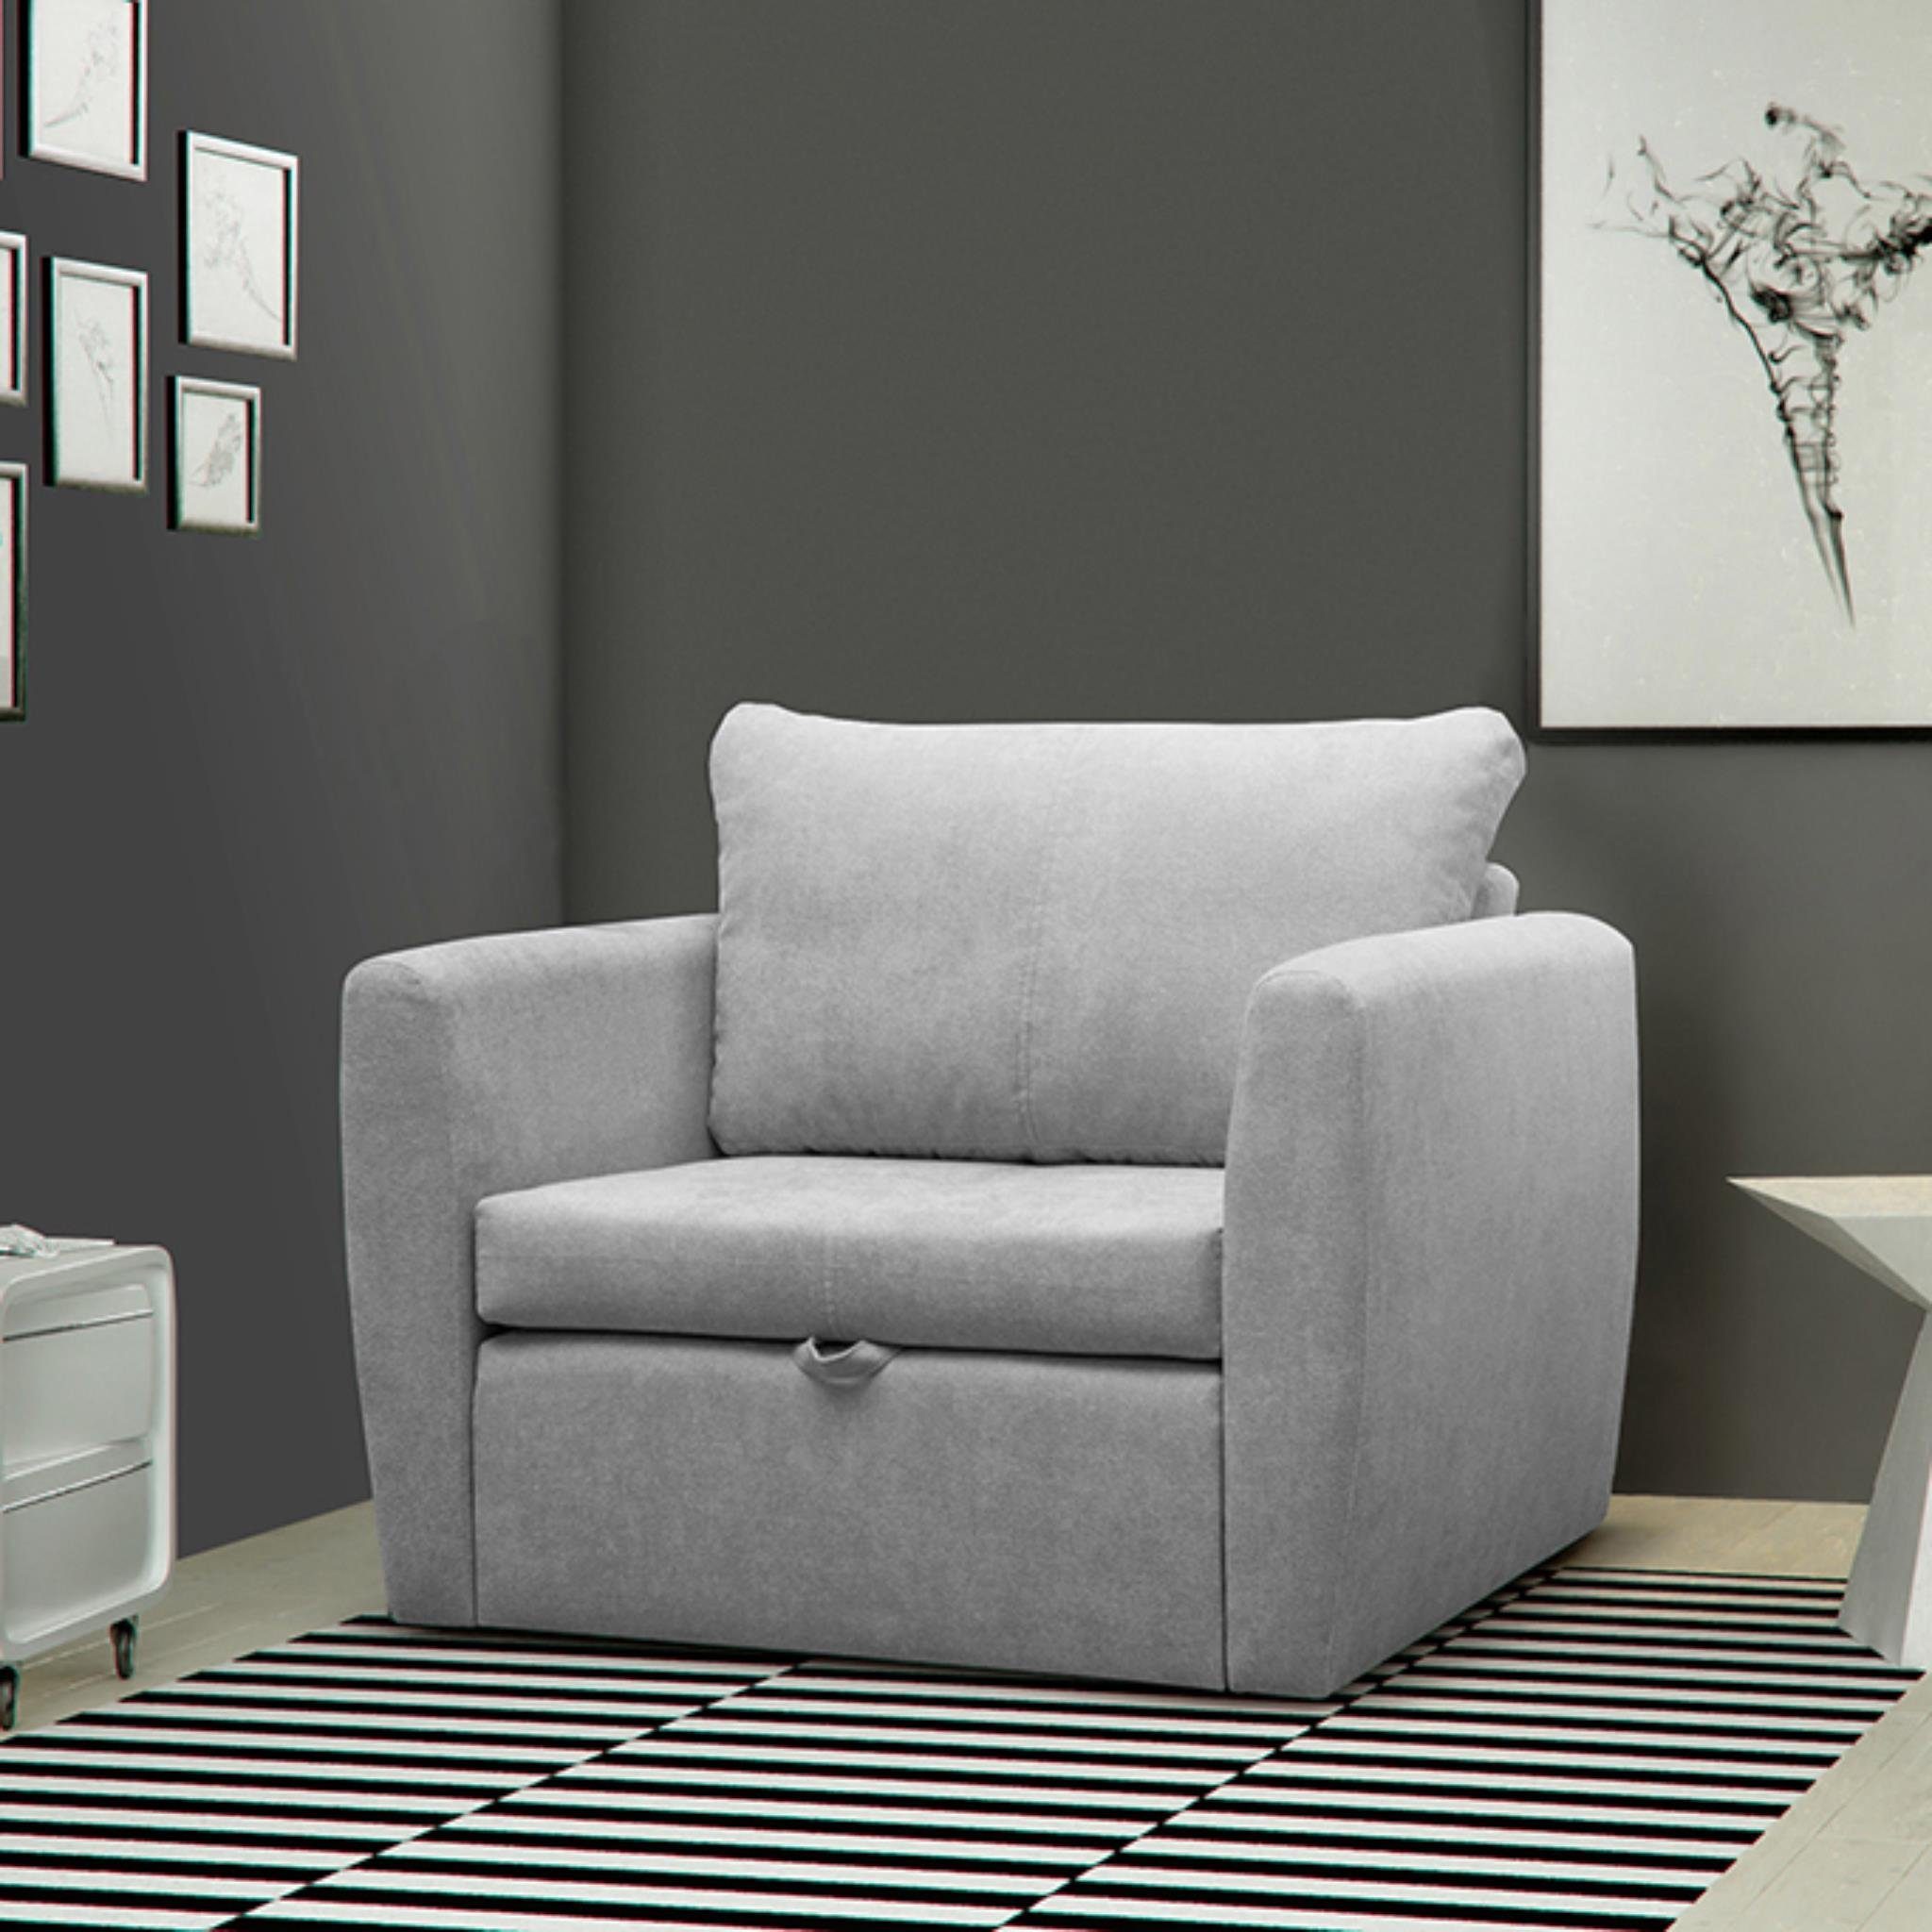 Beautysofa Relaxsessel Kamel (Modern 1-Sitzer Sofa, Wohnzimmersessel), mit Schlaffunktion, Bettkasten, Polstersessel Grau (alfa 50)